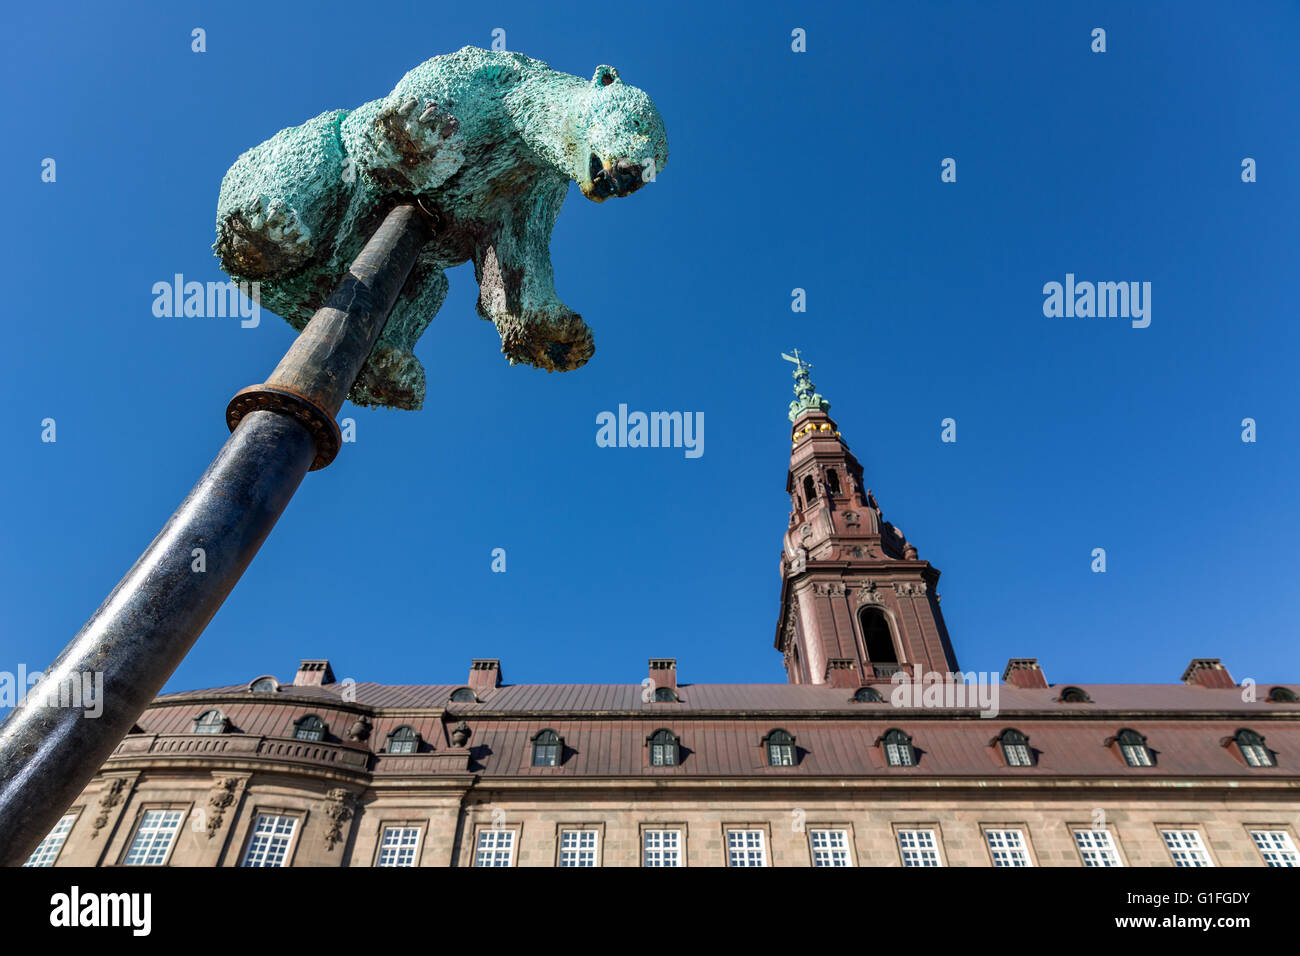 The sculpture 'Unbearable' in front of the Danish Parliament, Slotsholmen, Copenhagen, Denmark Stock Photo